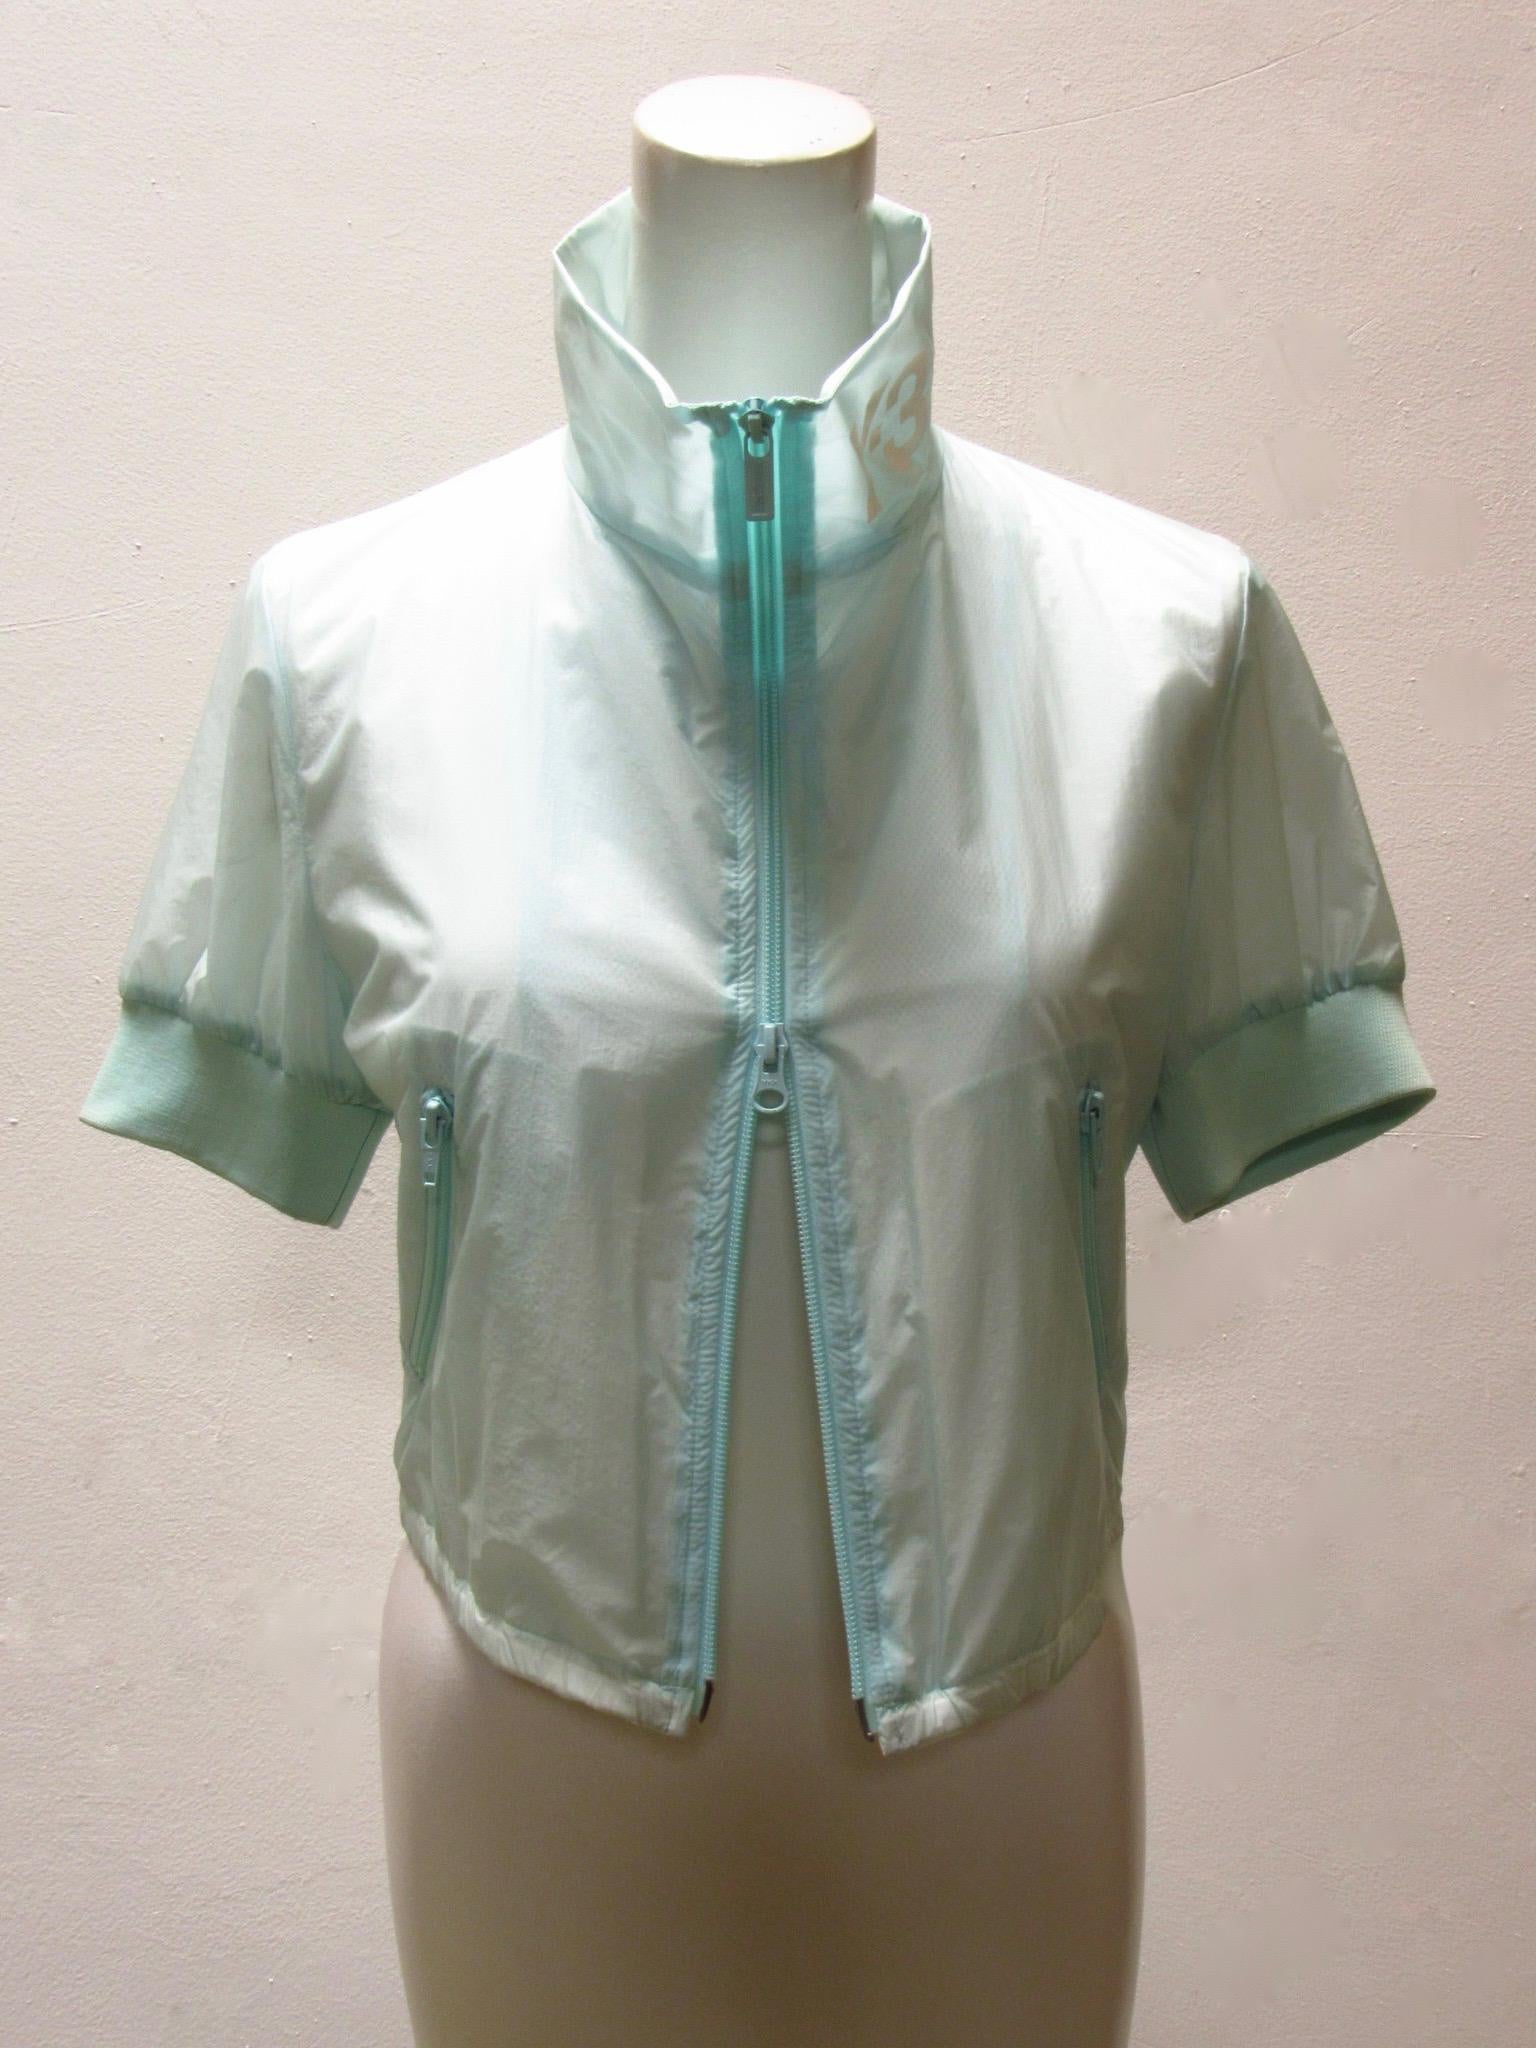 Y-3 Yohji Yamamoto Mint Cheerleader Jacket (Veste de pom-pom girl) Pour femmes en vente